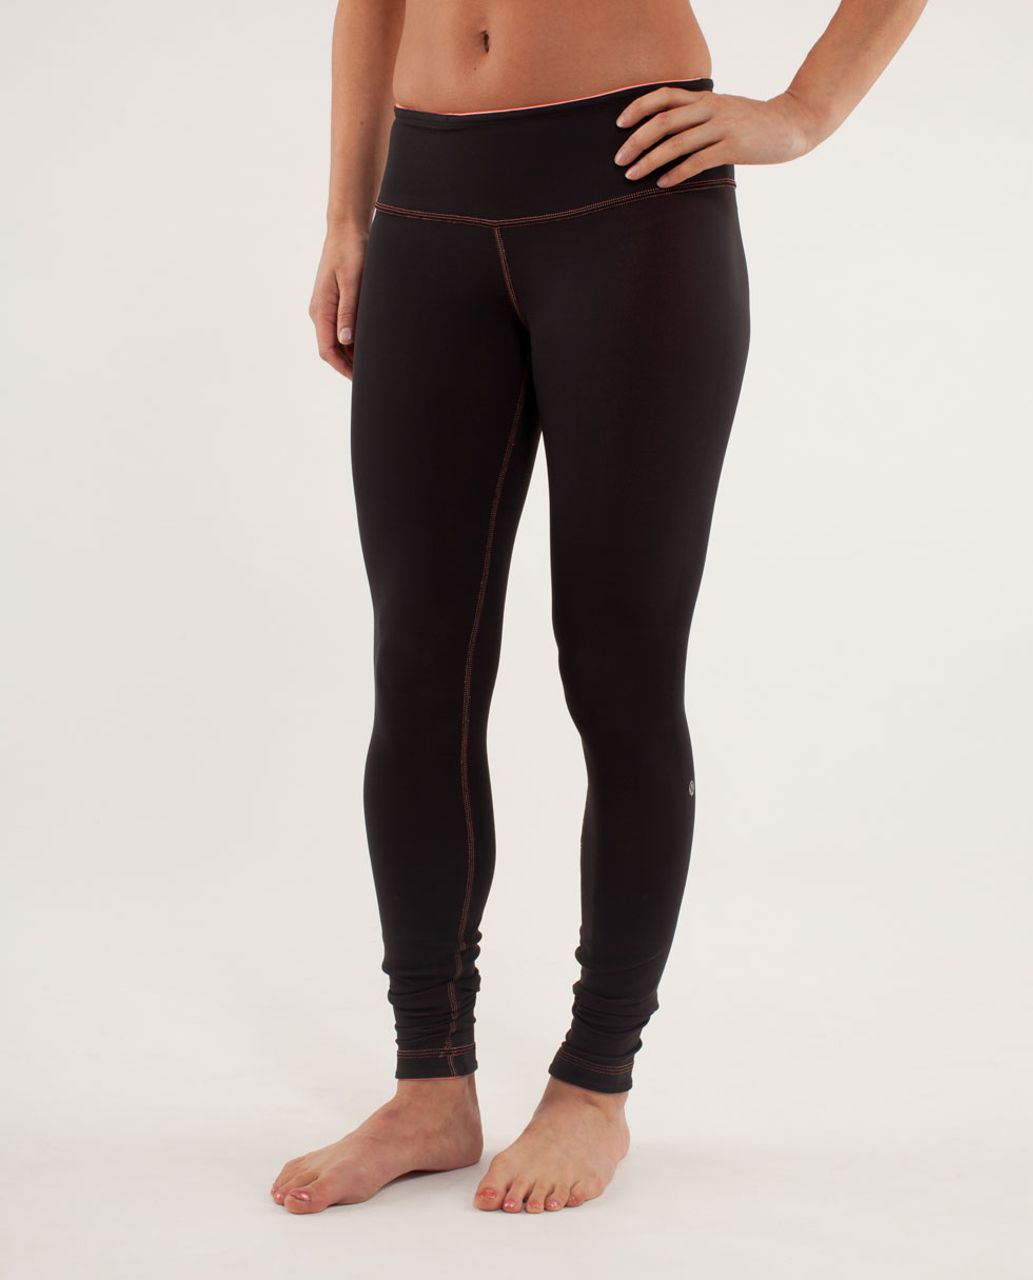 Lululemon align leggings joggers in black camo - Depop